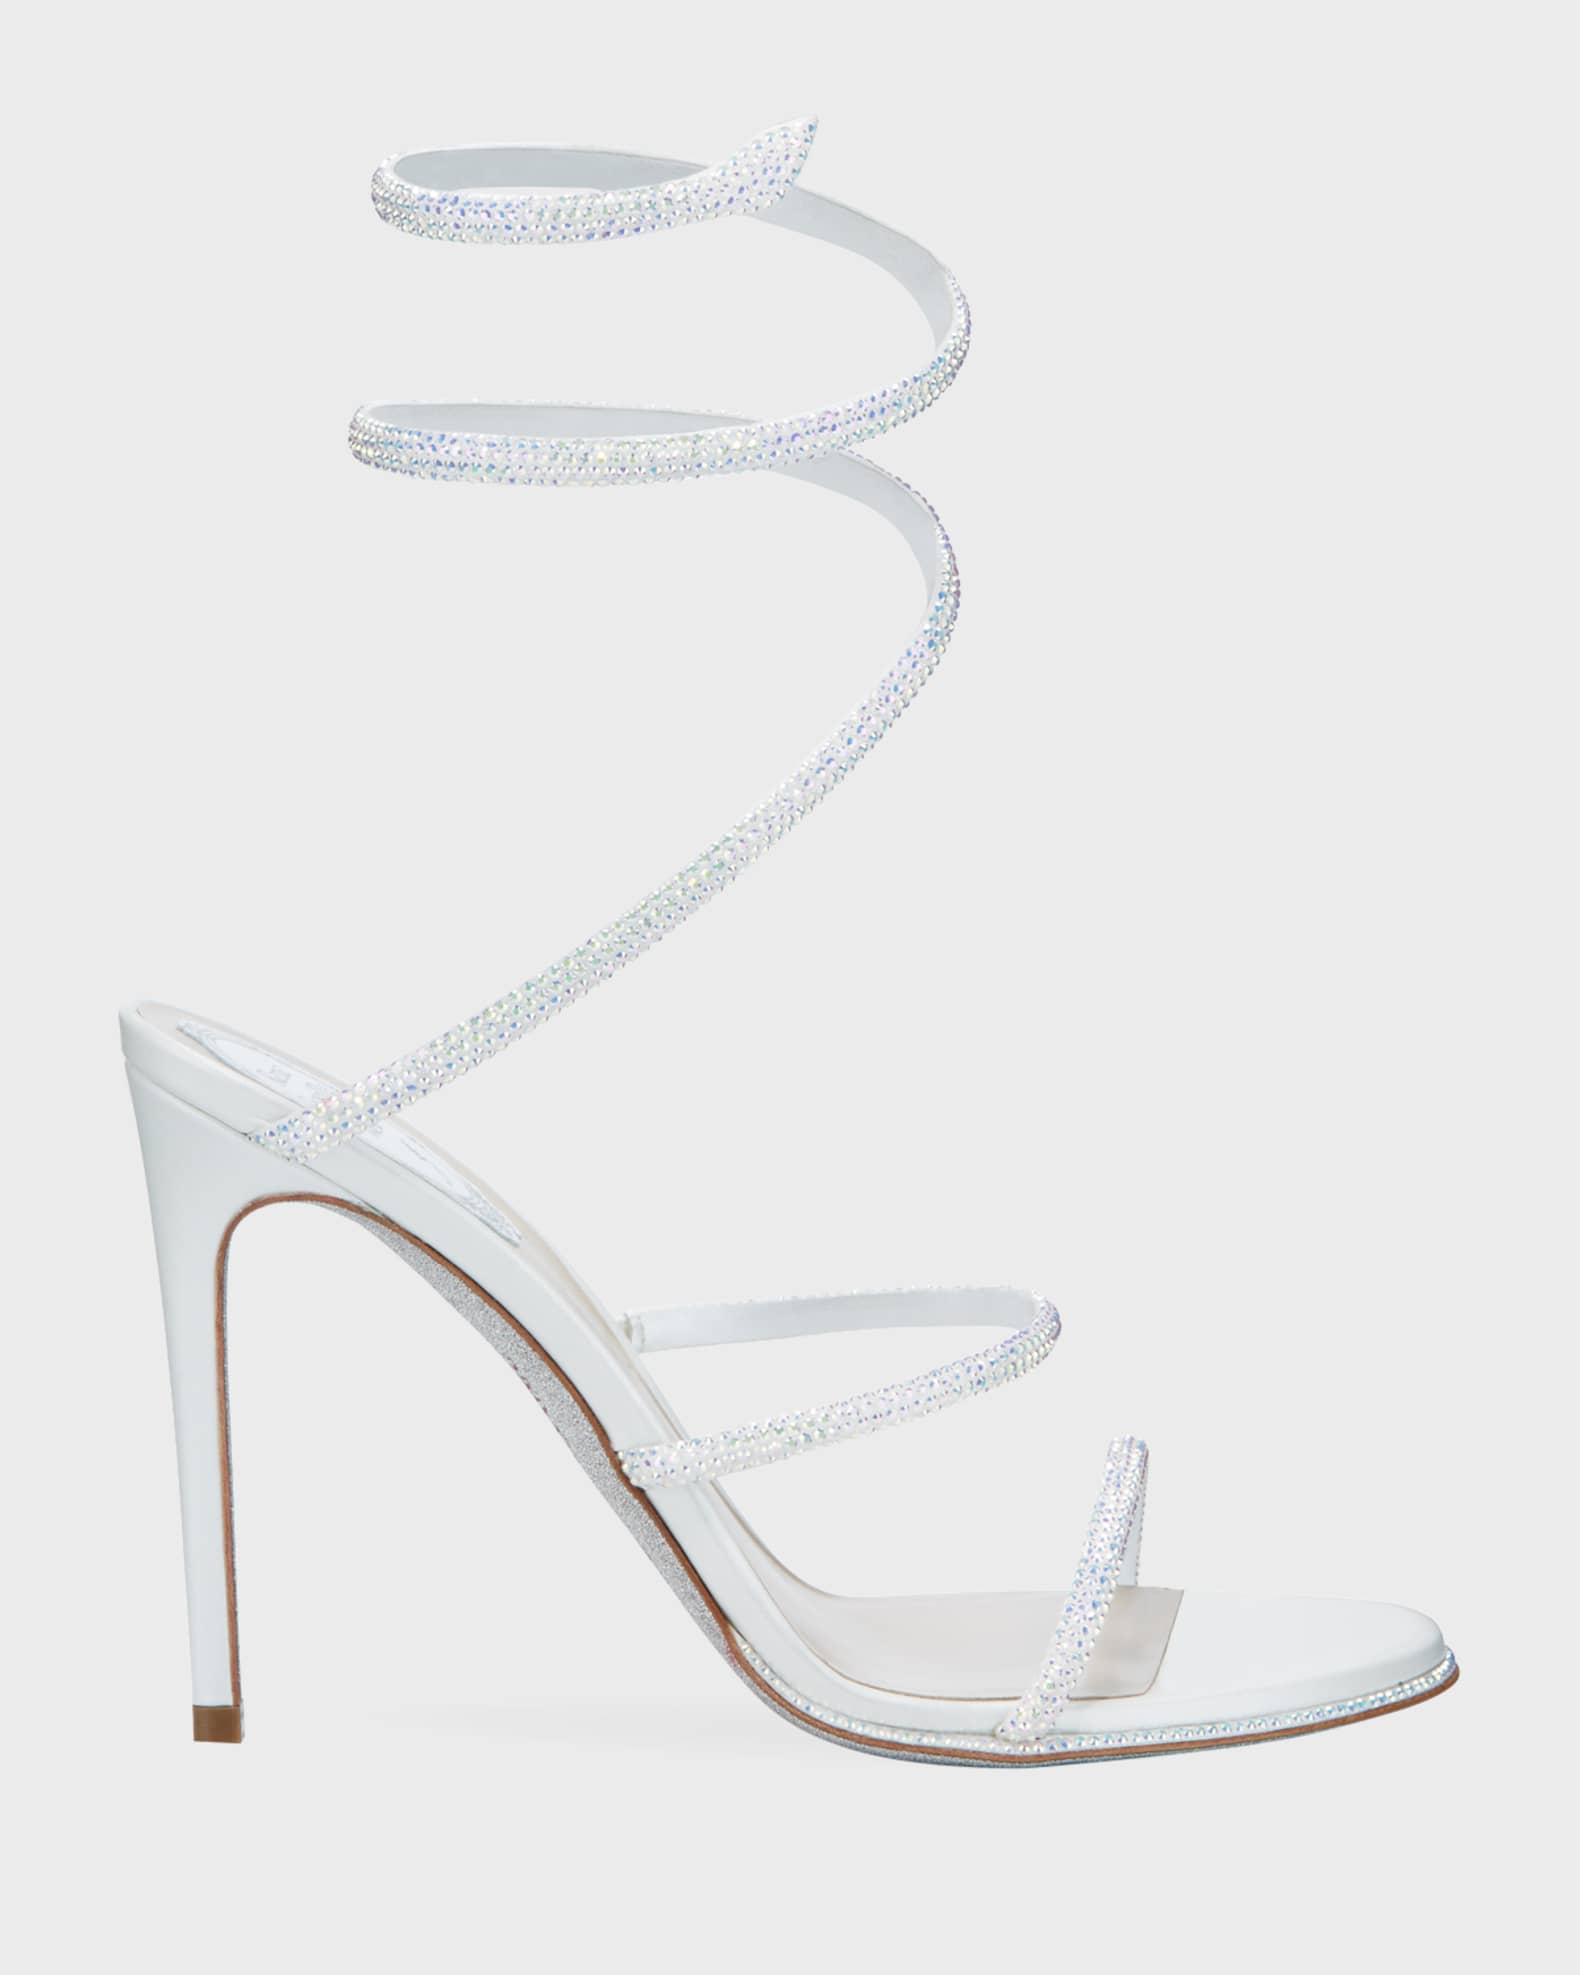 Rene Caovilla Shimmery Crystal Satin Snake Sandals | Neiman Marcus